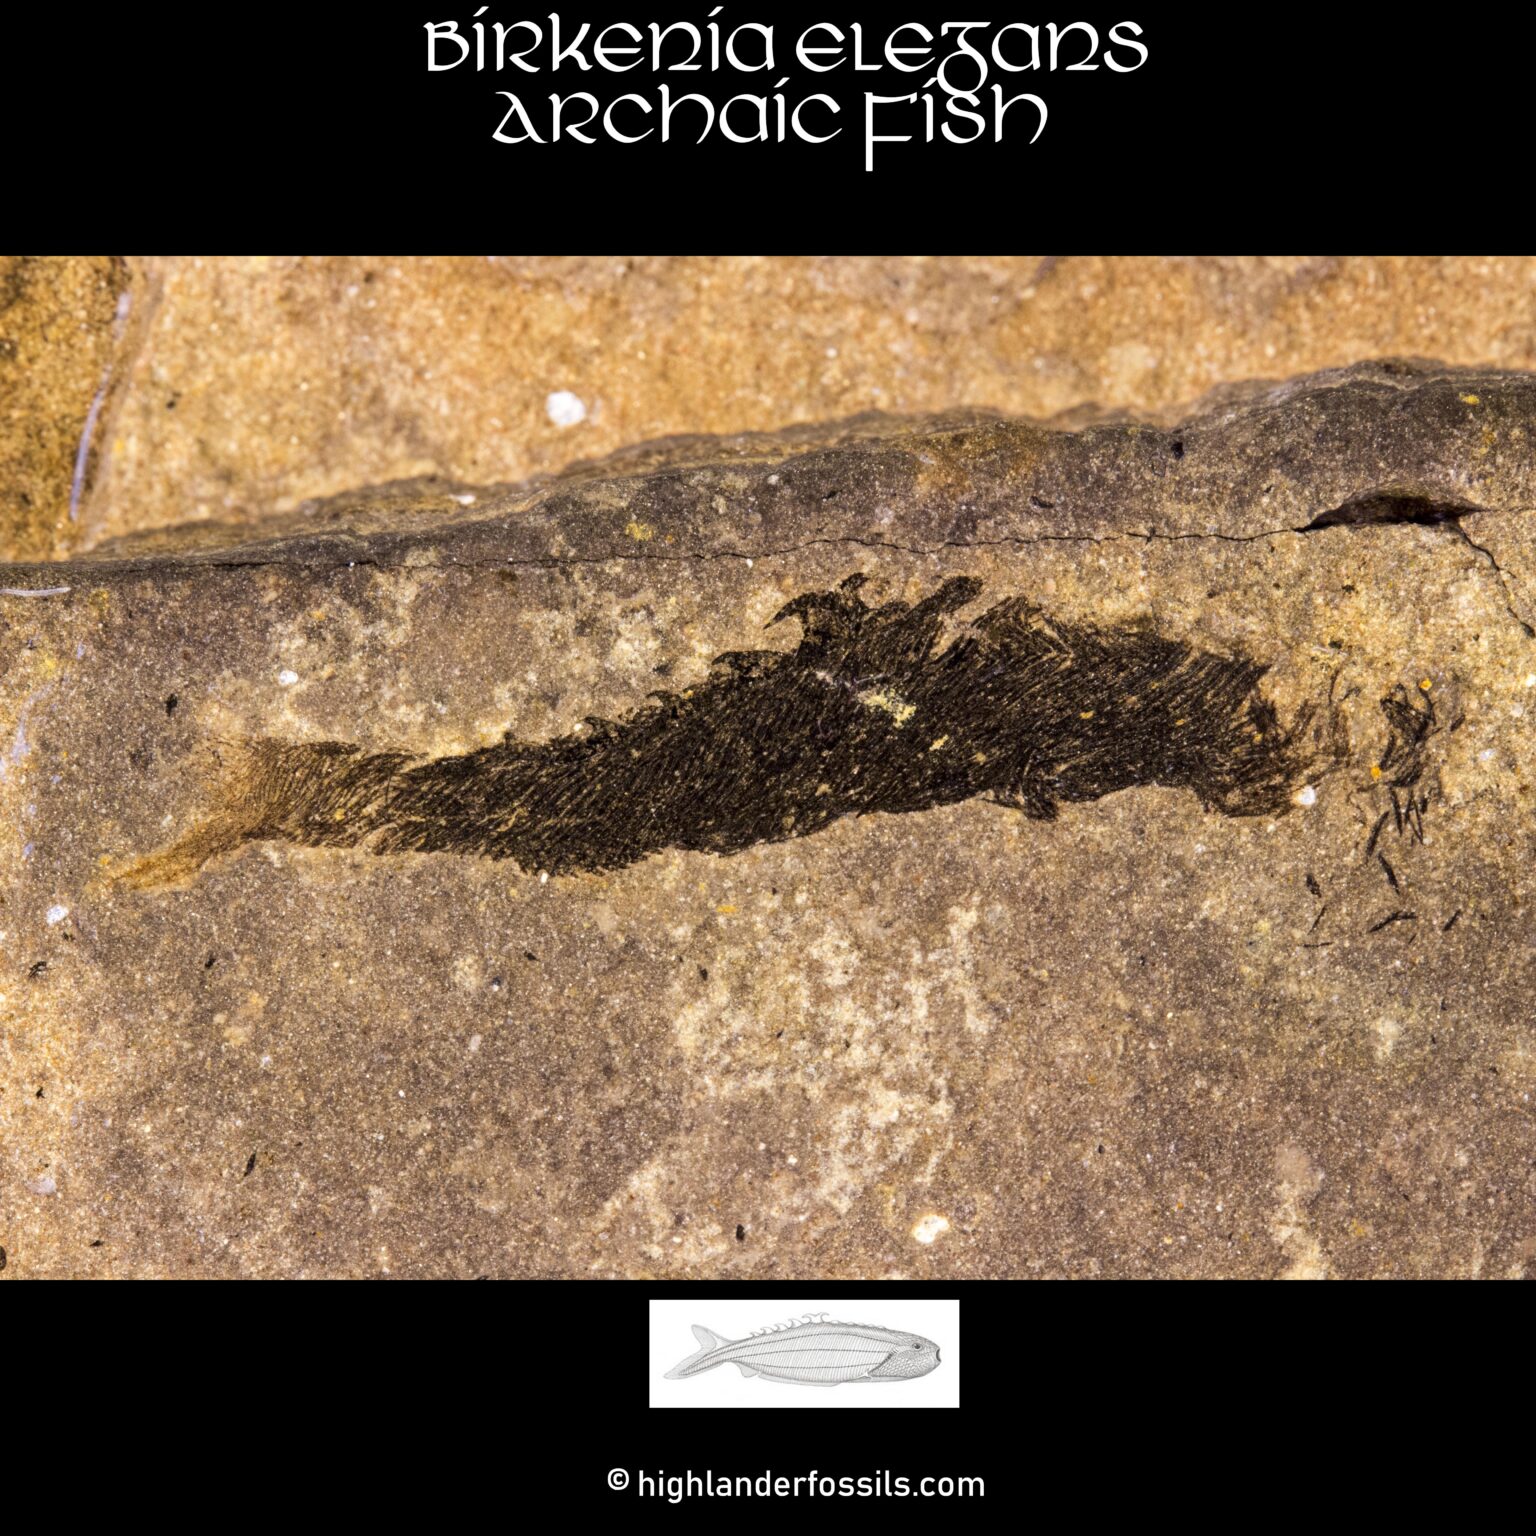 birkenia elegans for sale